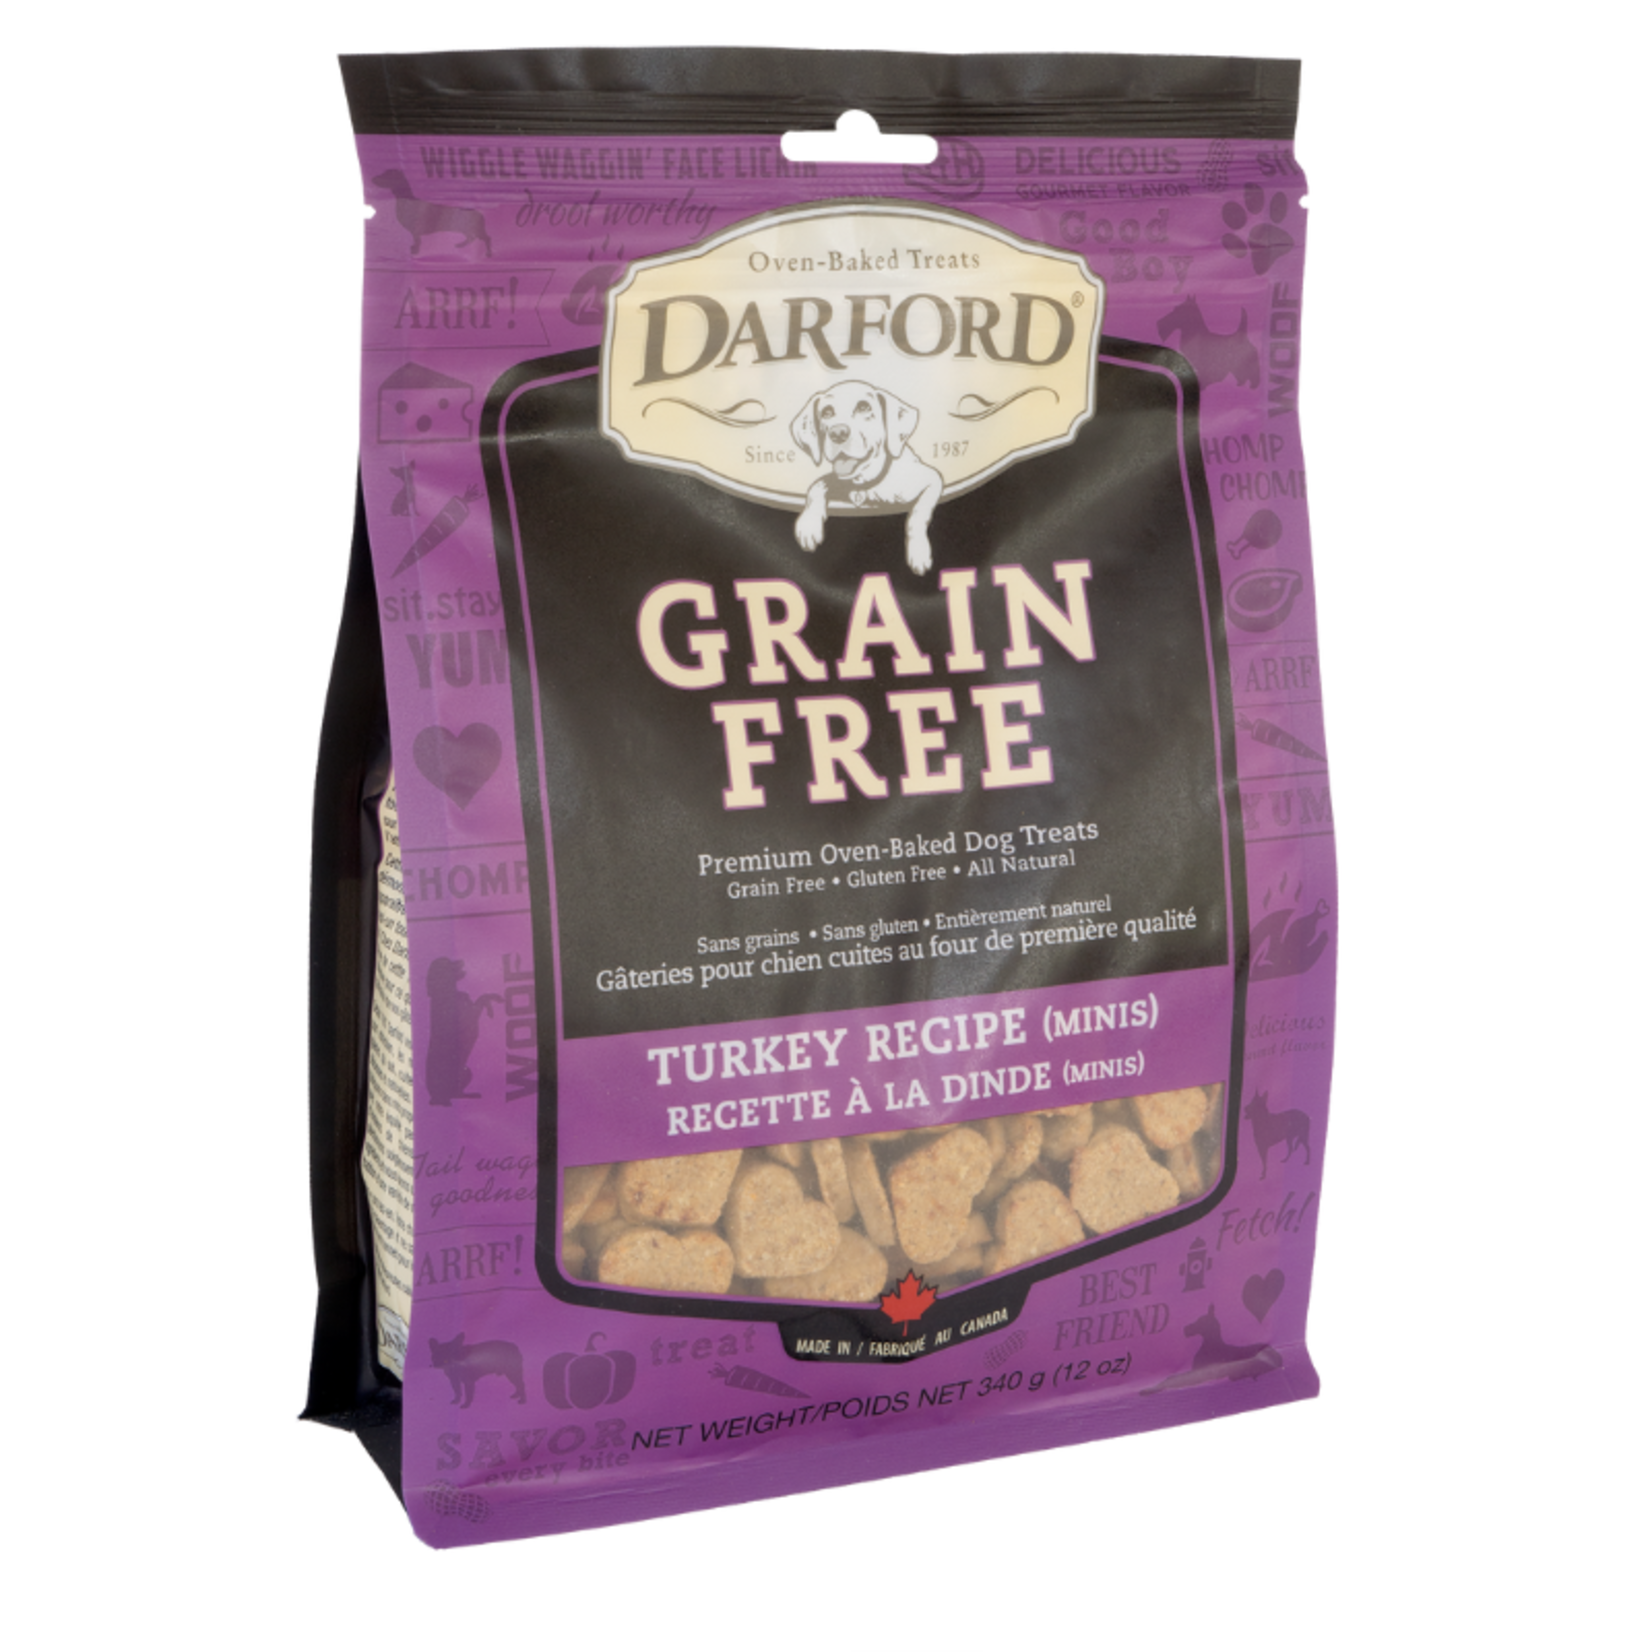 Darford 12 oz. / Minis - Turkey Recipe - Grain-Free Dog Treats - Darford